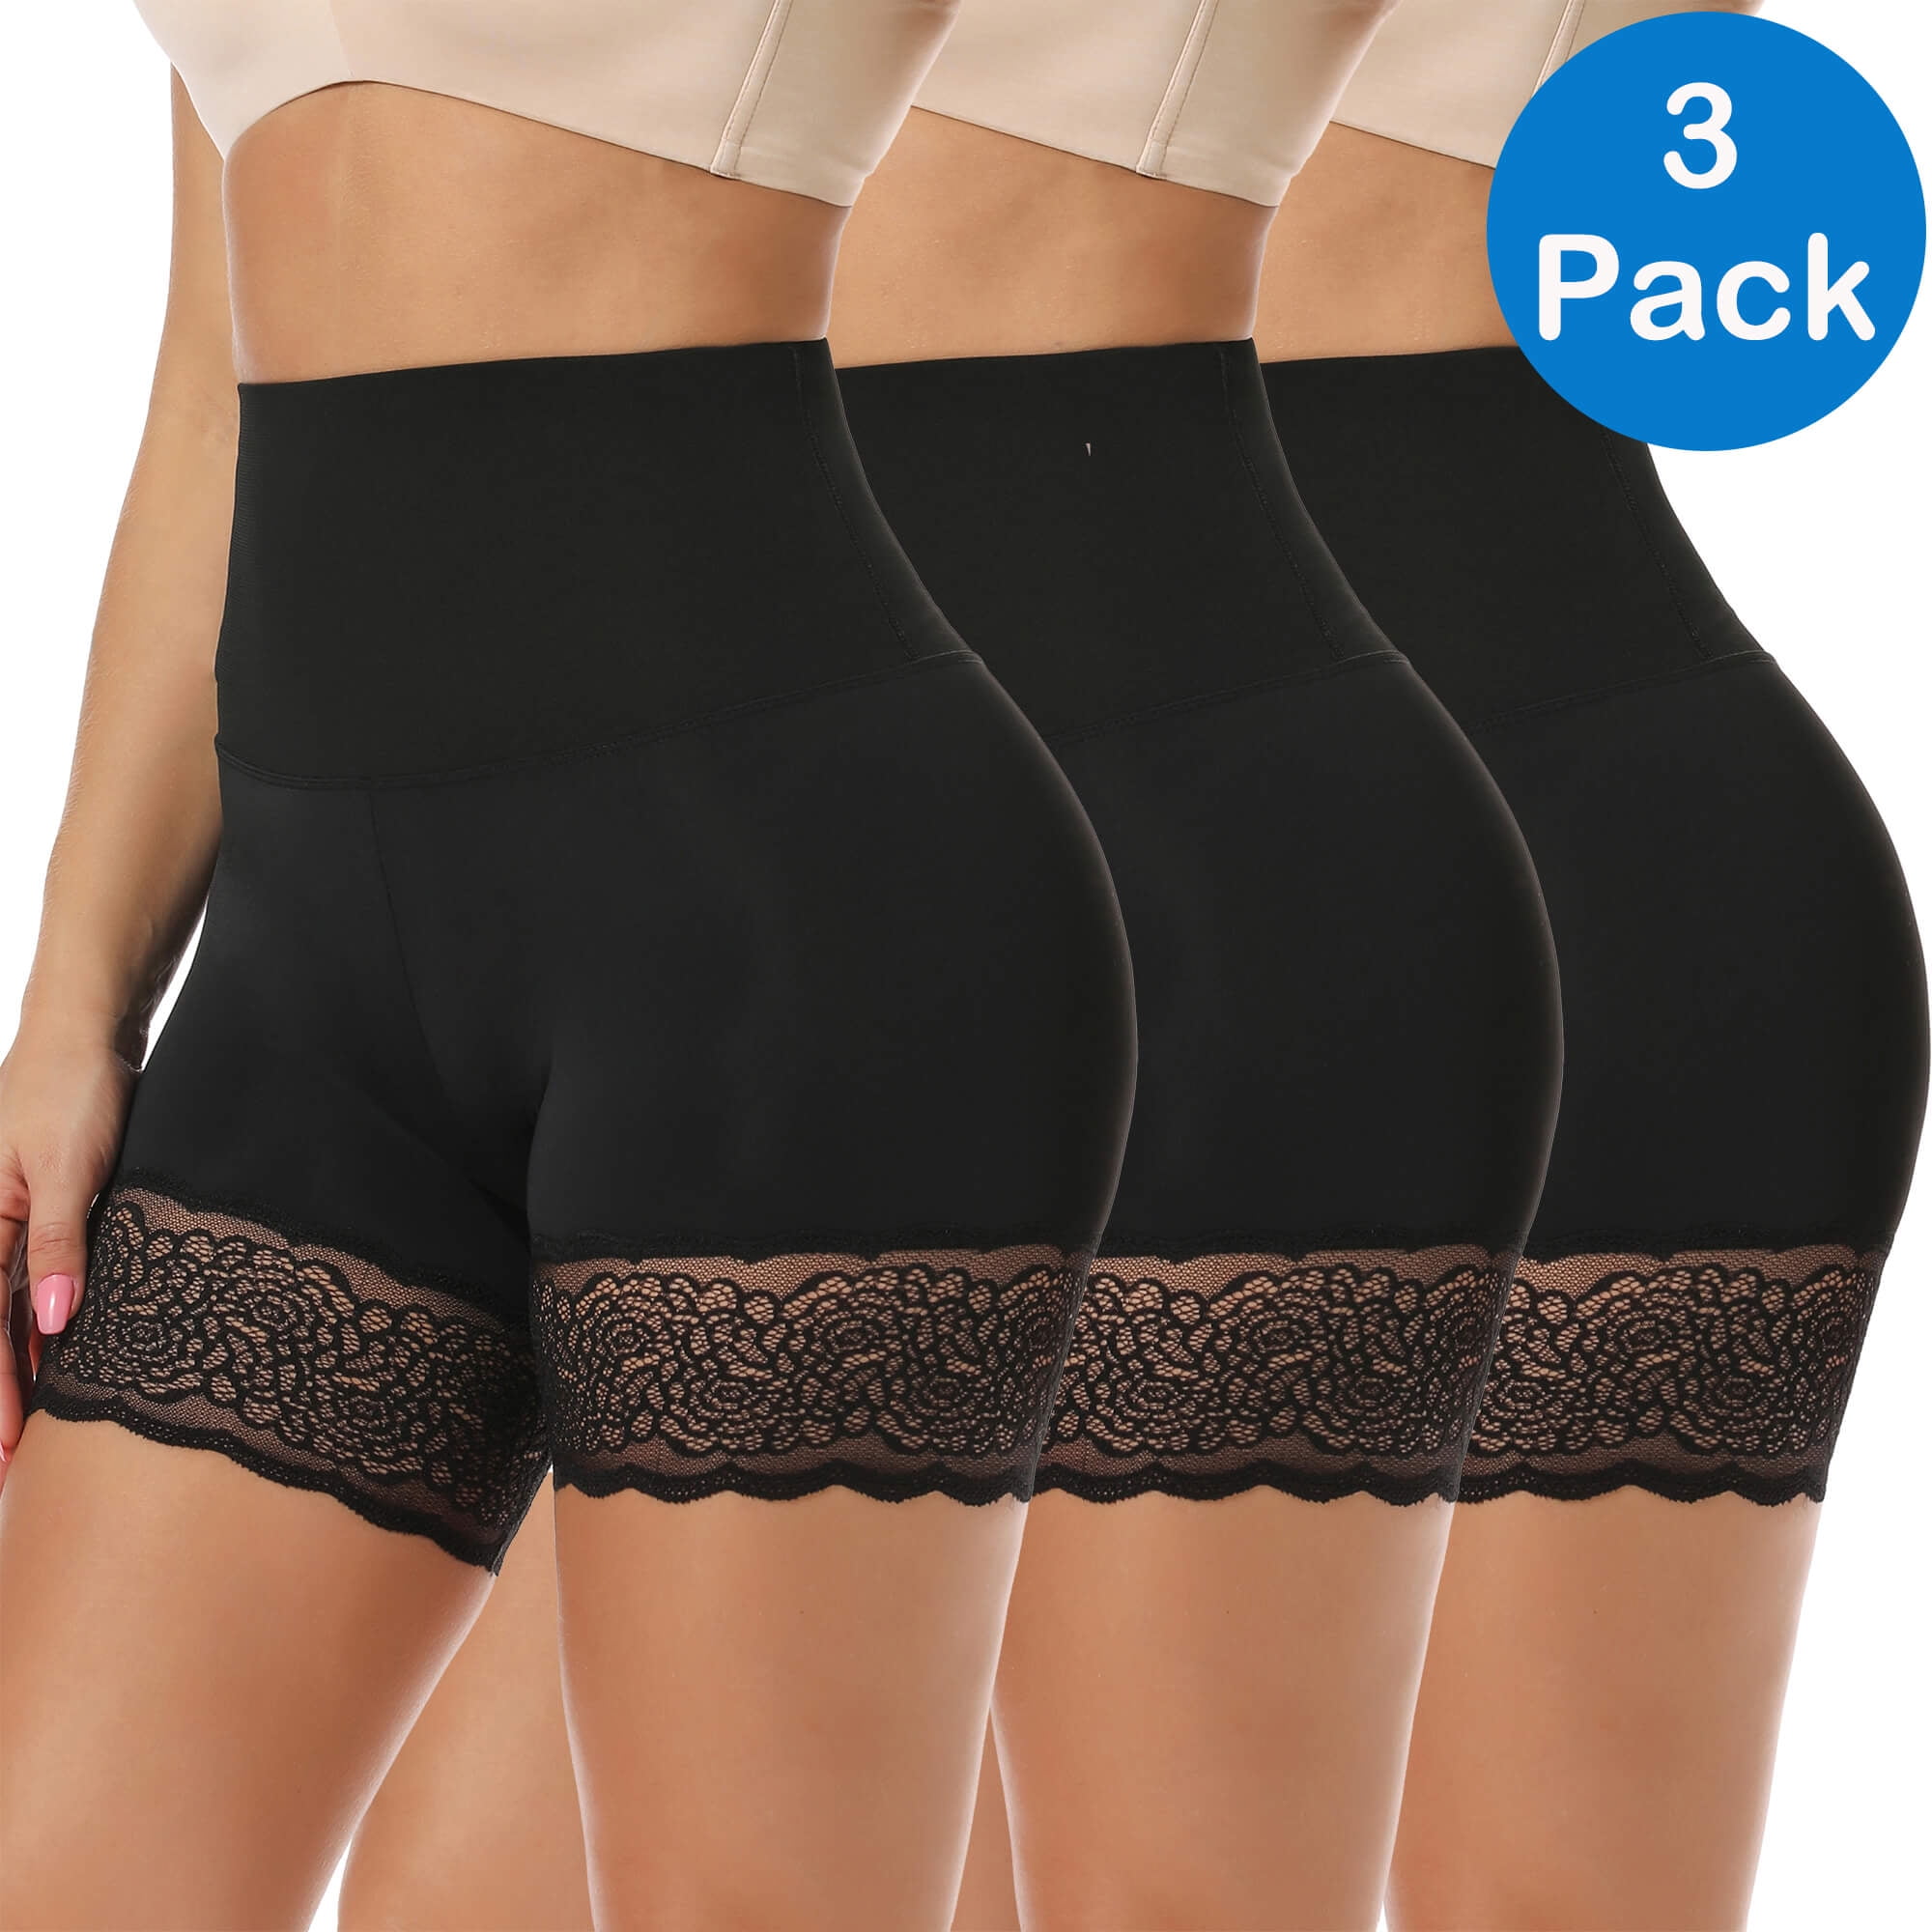 VASLANDA Slip Shorts for Under Dresses Women Elastic Anti Chafing Thigh  Bands Underwear Lace Panty